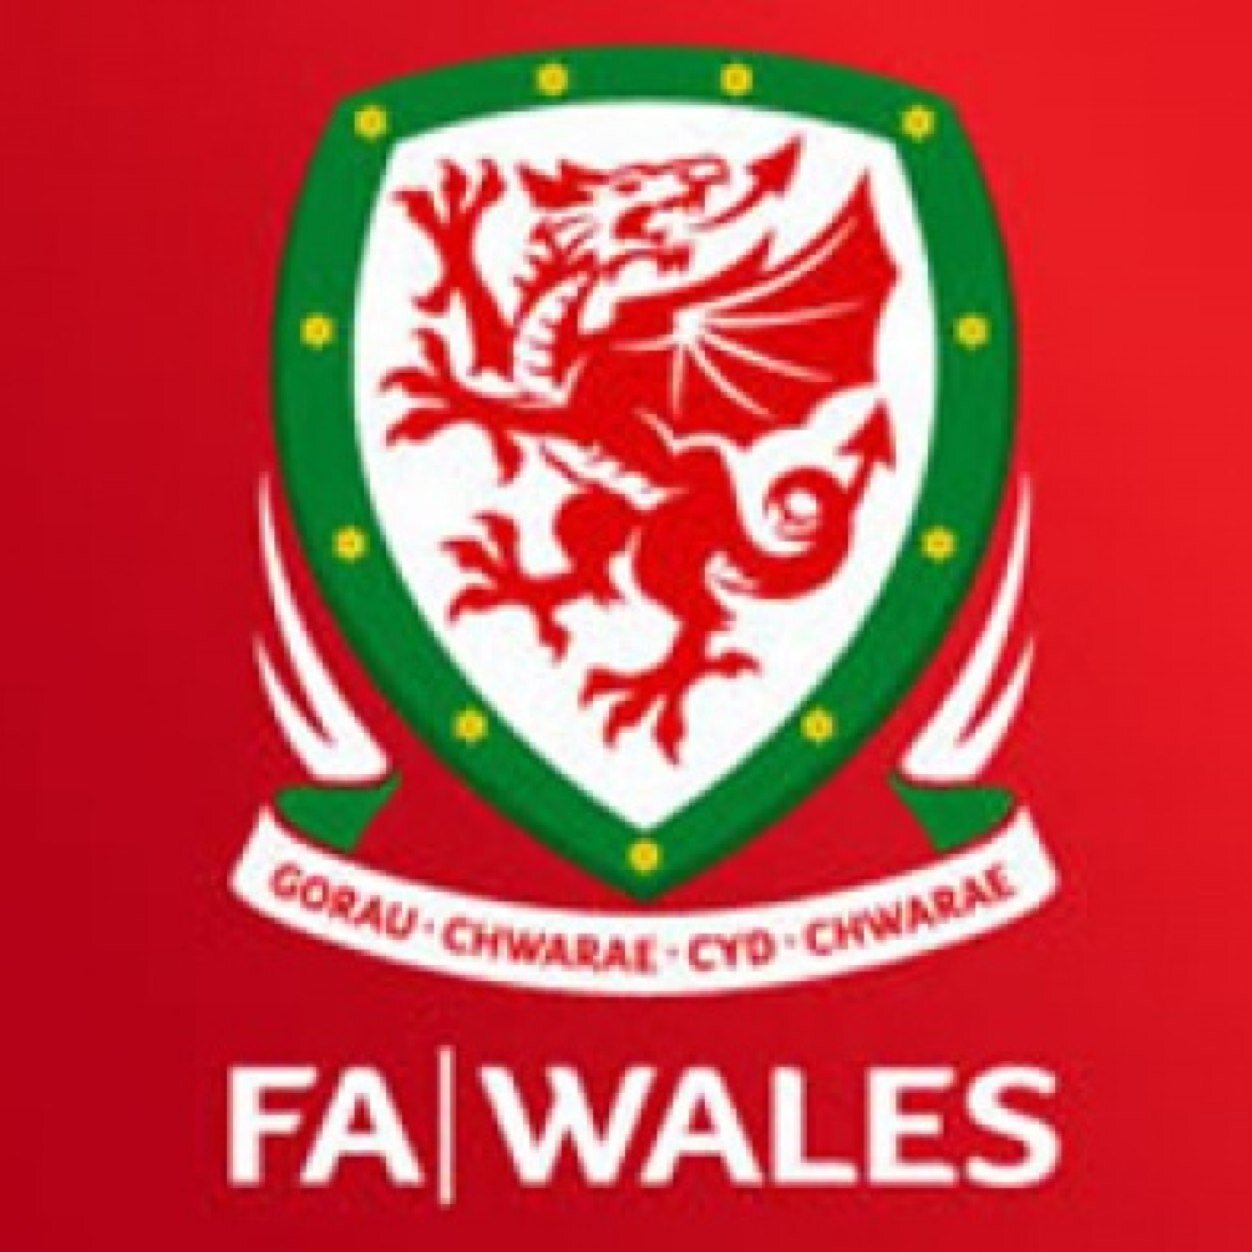 Wales Football Fans